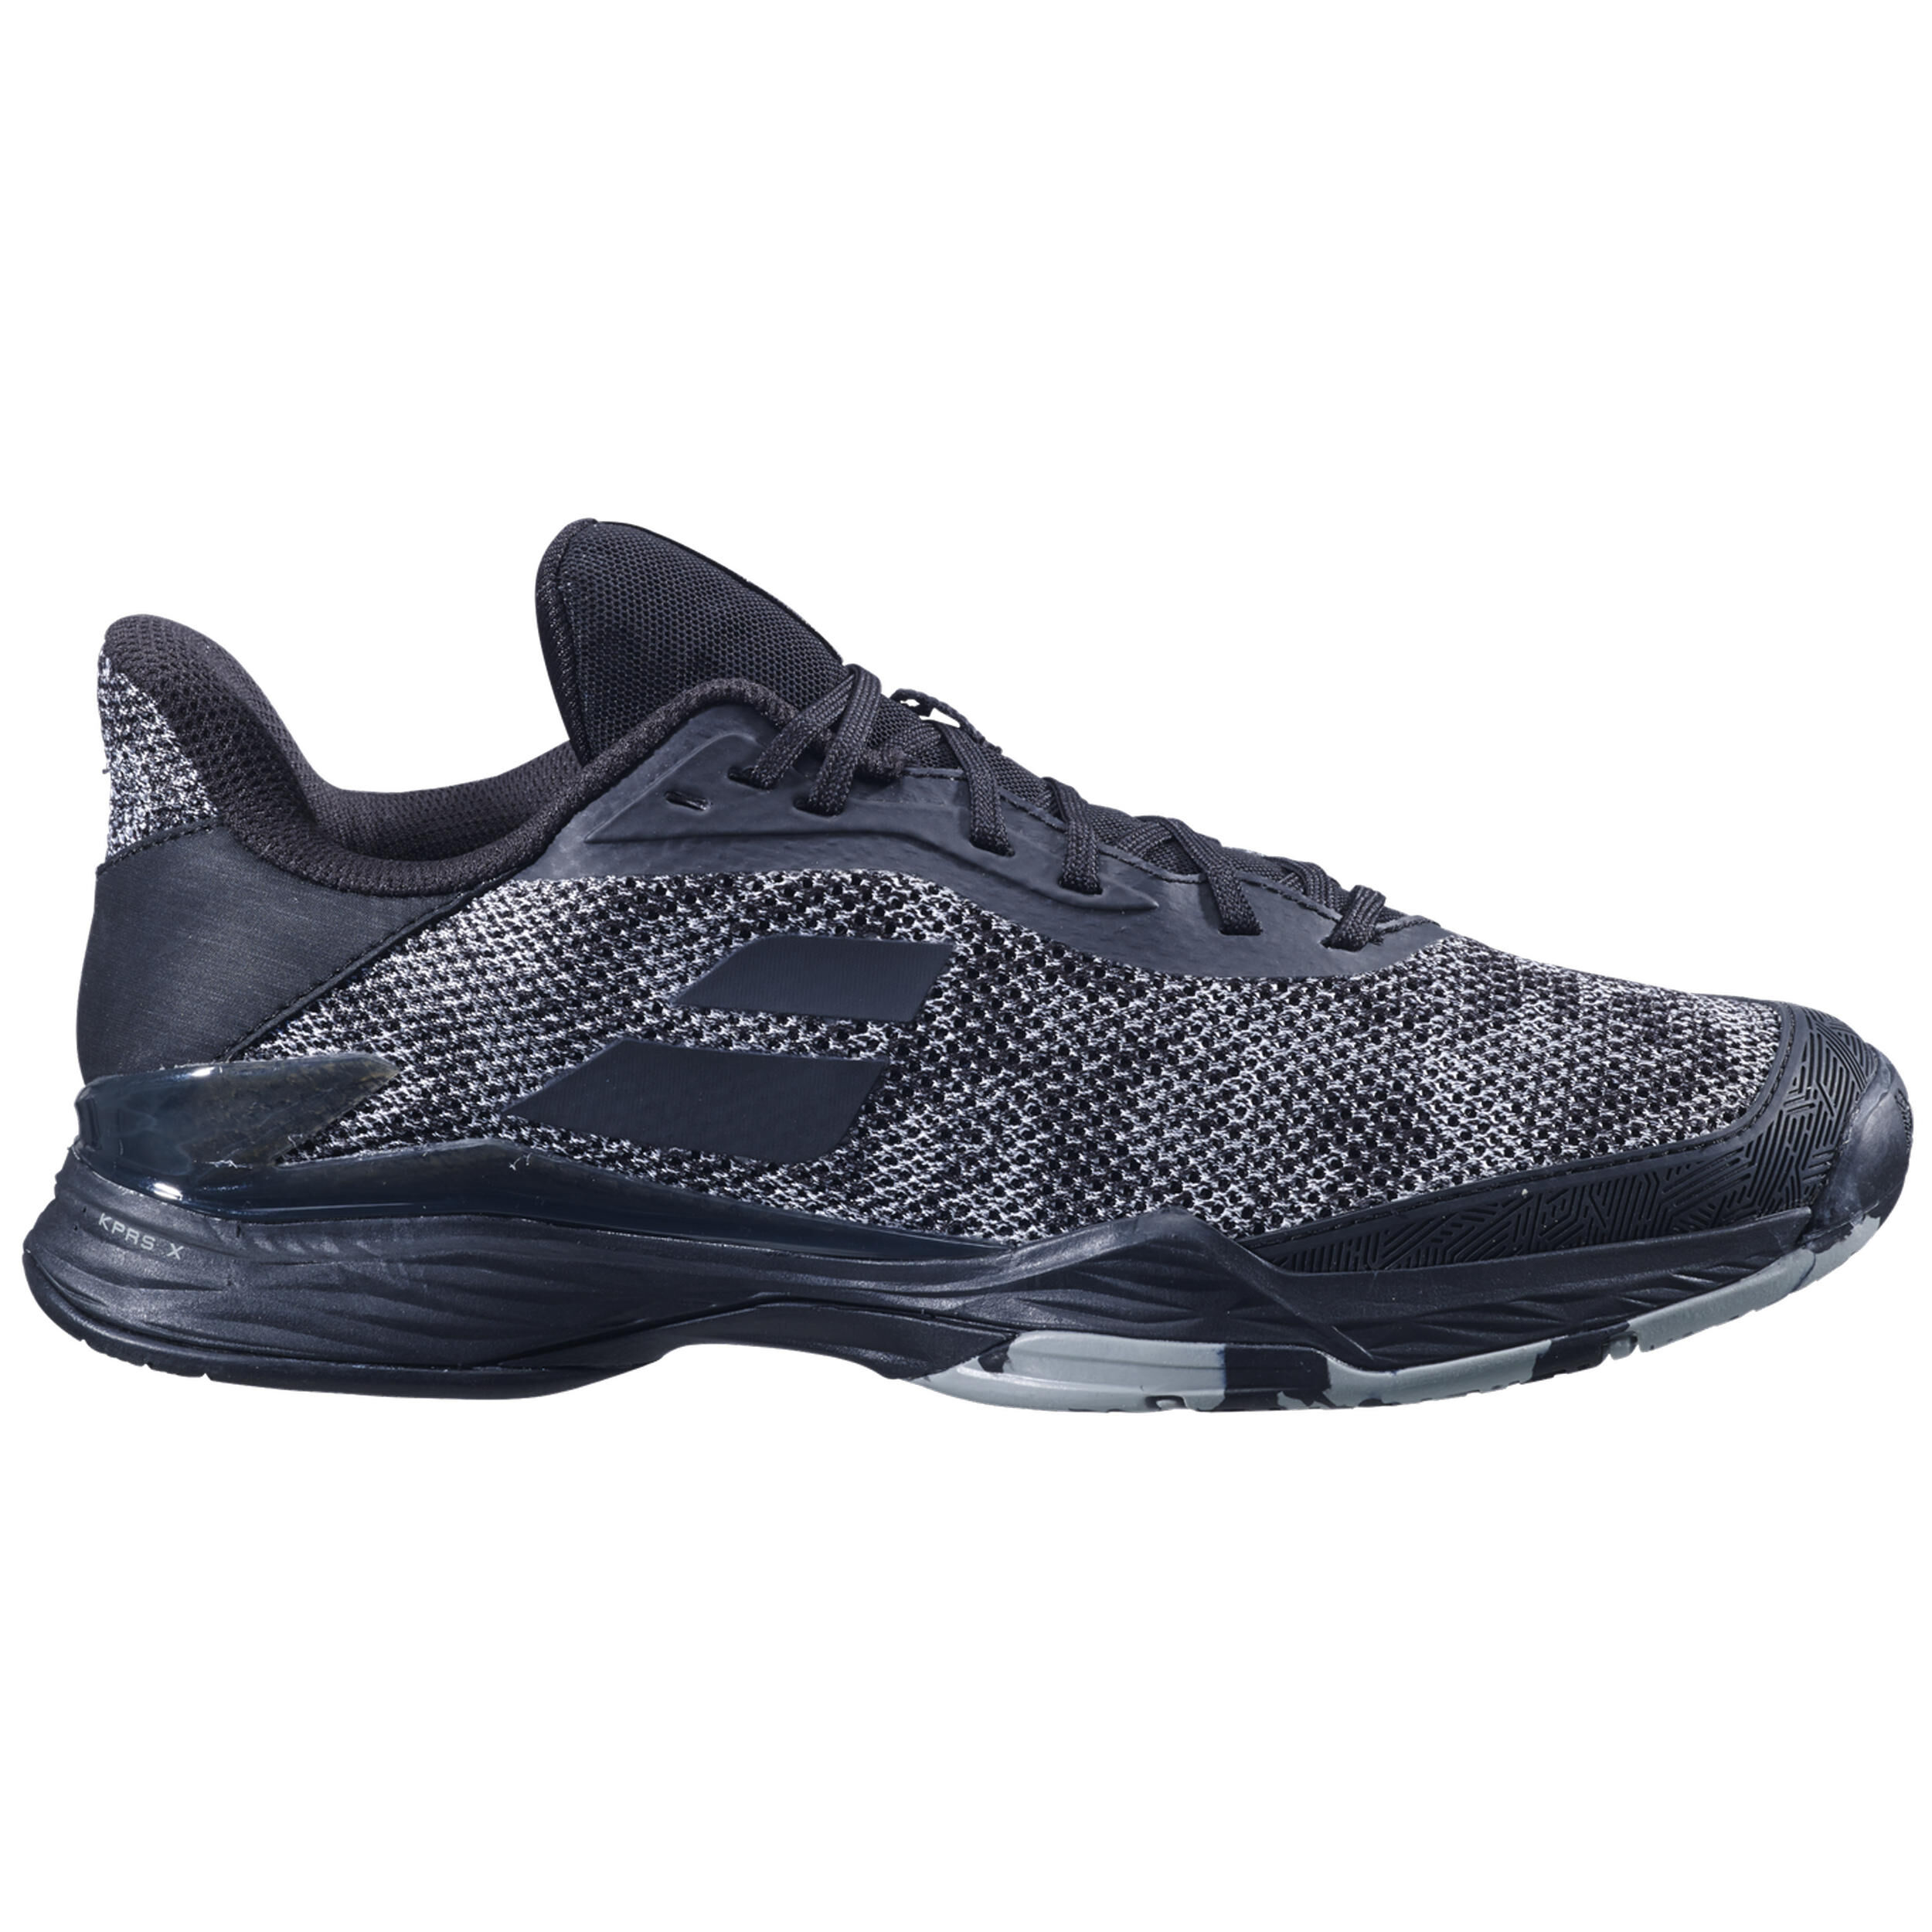 BABOLAT Men's Multi-Court Tennis Shoes Jet Tere - Black/Grey